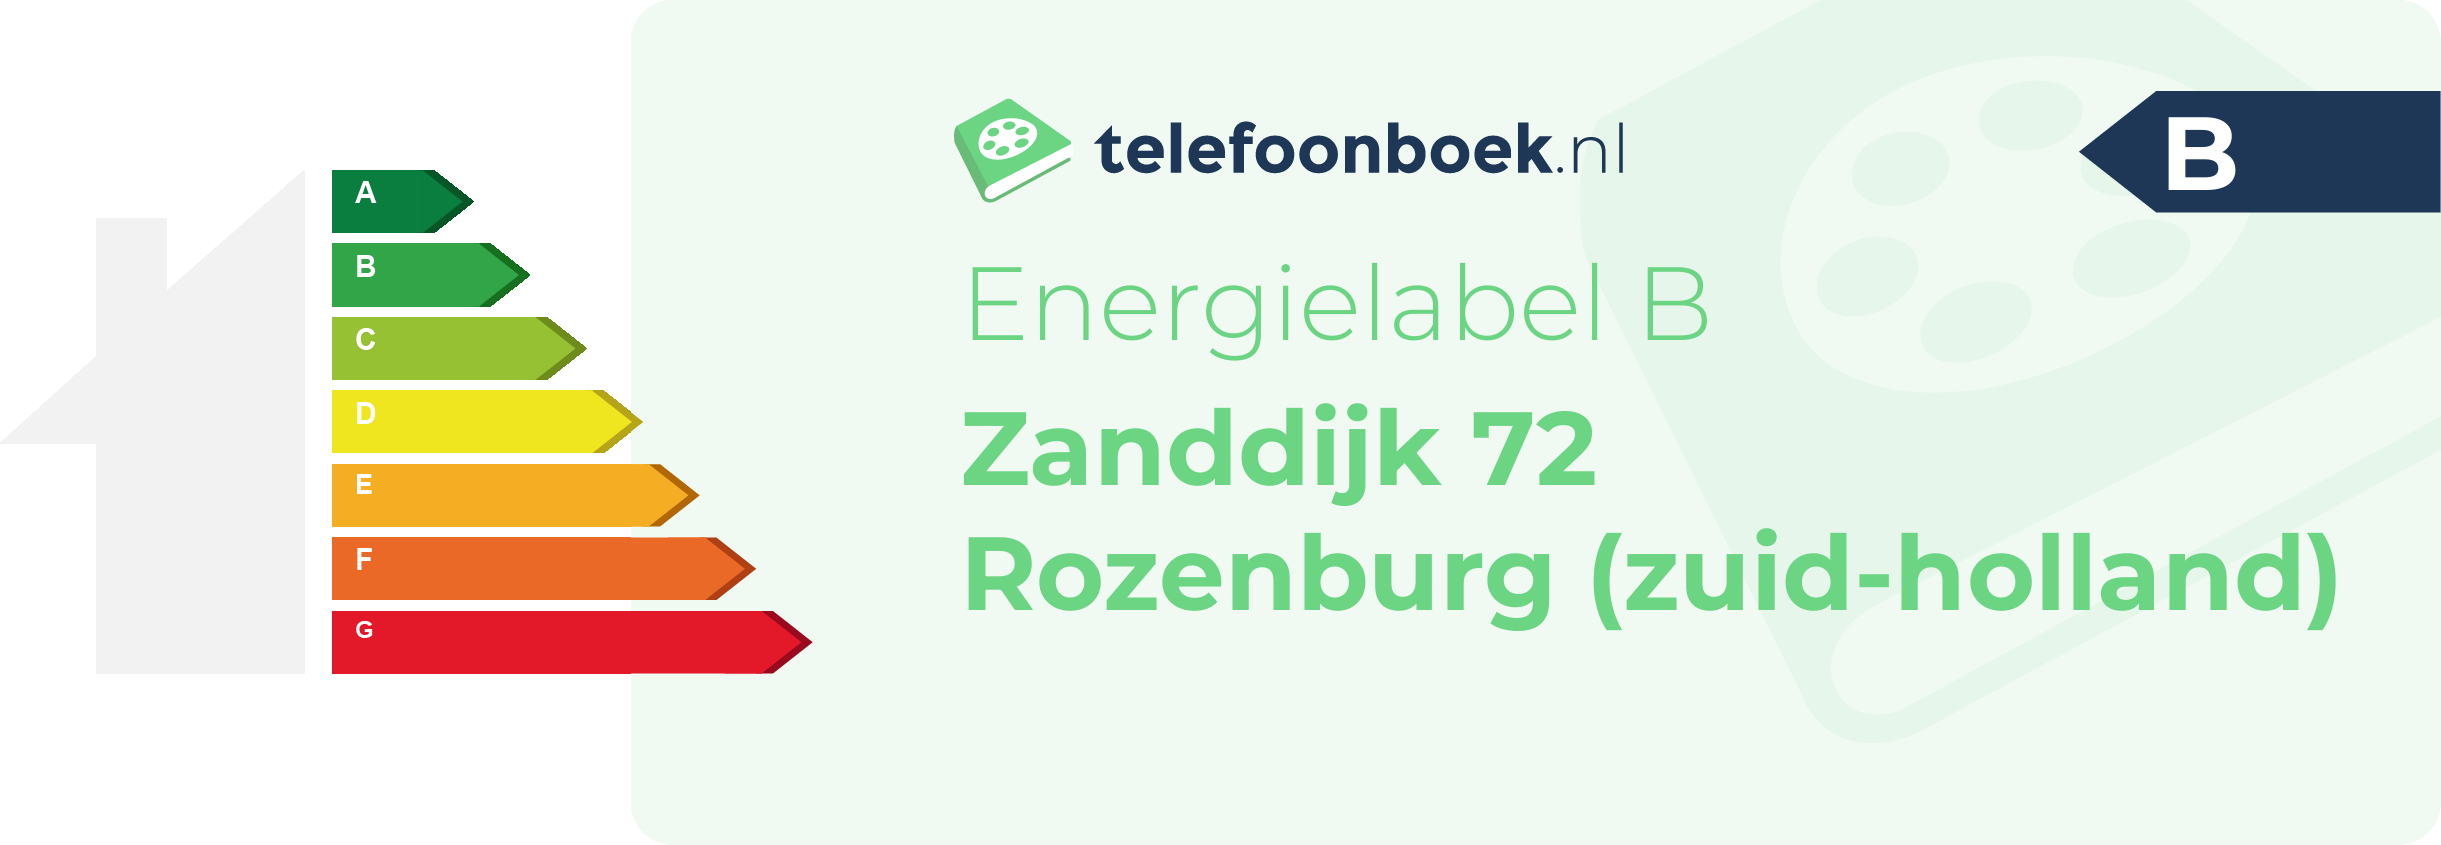 Energielabel Zanddijk 72 Rozenburg (Zuid-Holland)